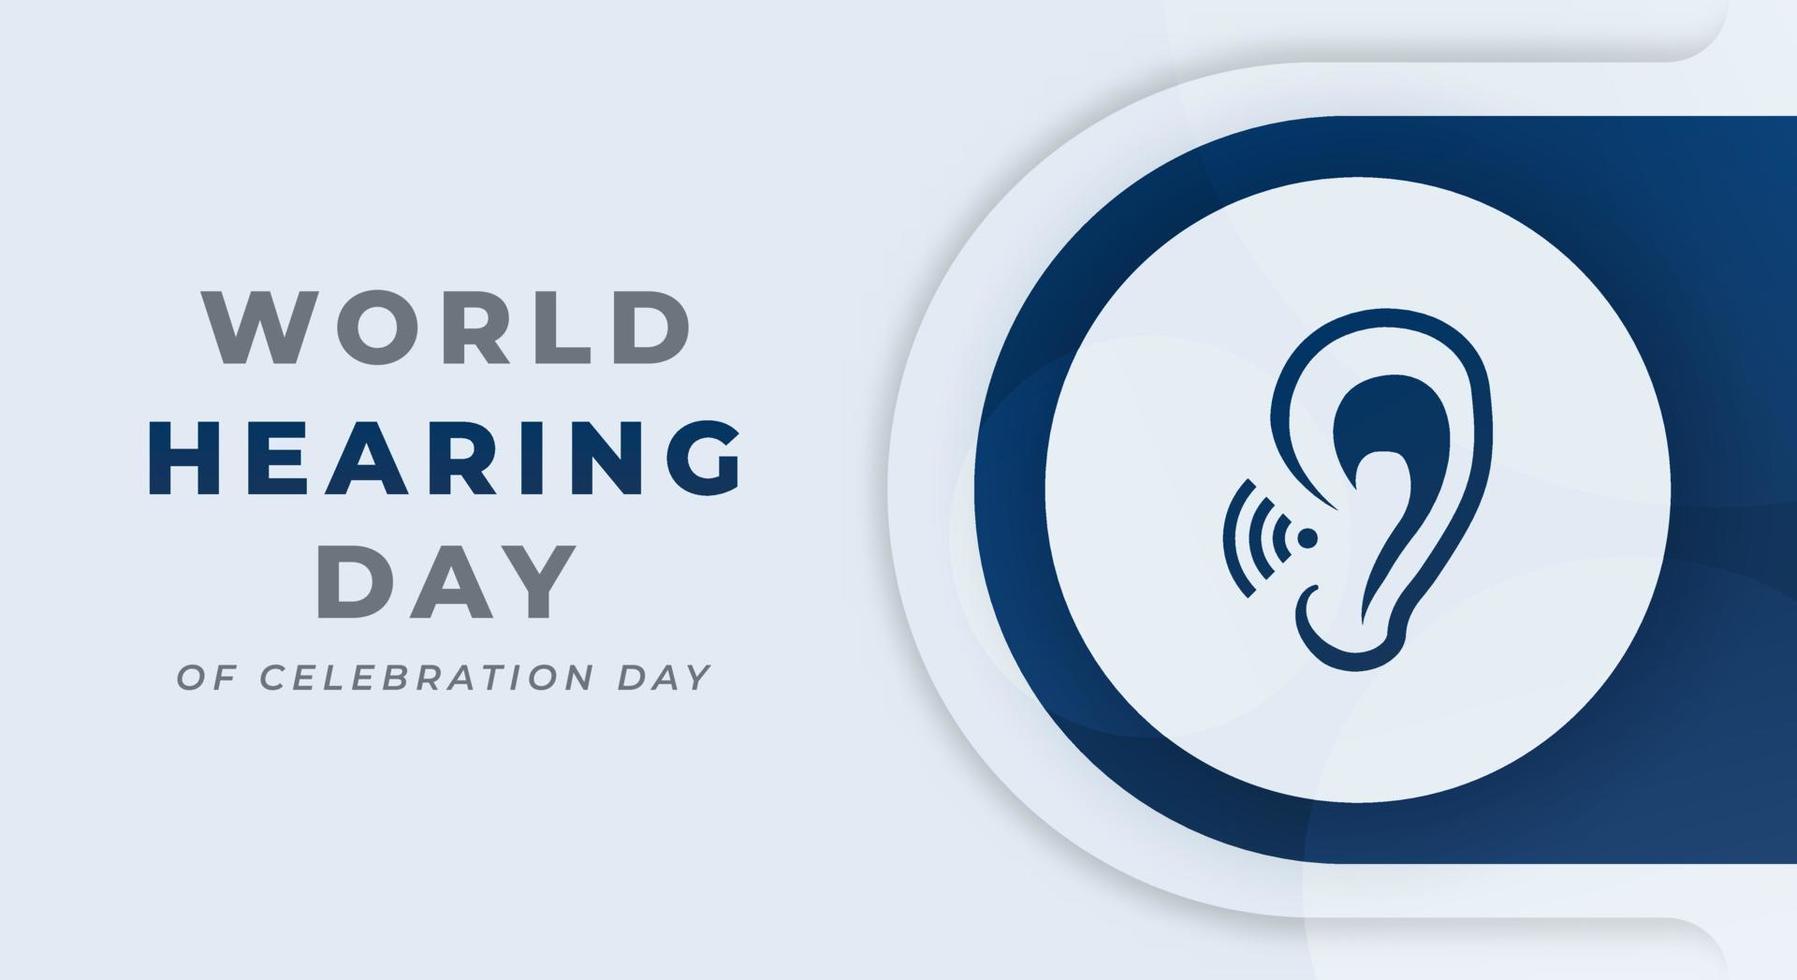 World Hearing Day Celebration Vector Design Illustration for Background, Poster, Banner, Advertising, Greeting Card